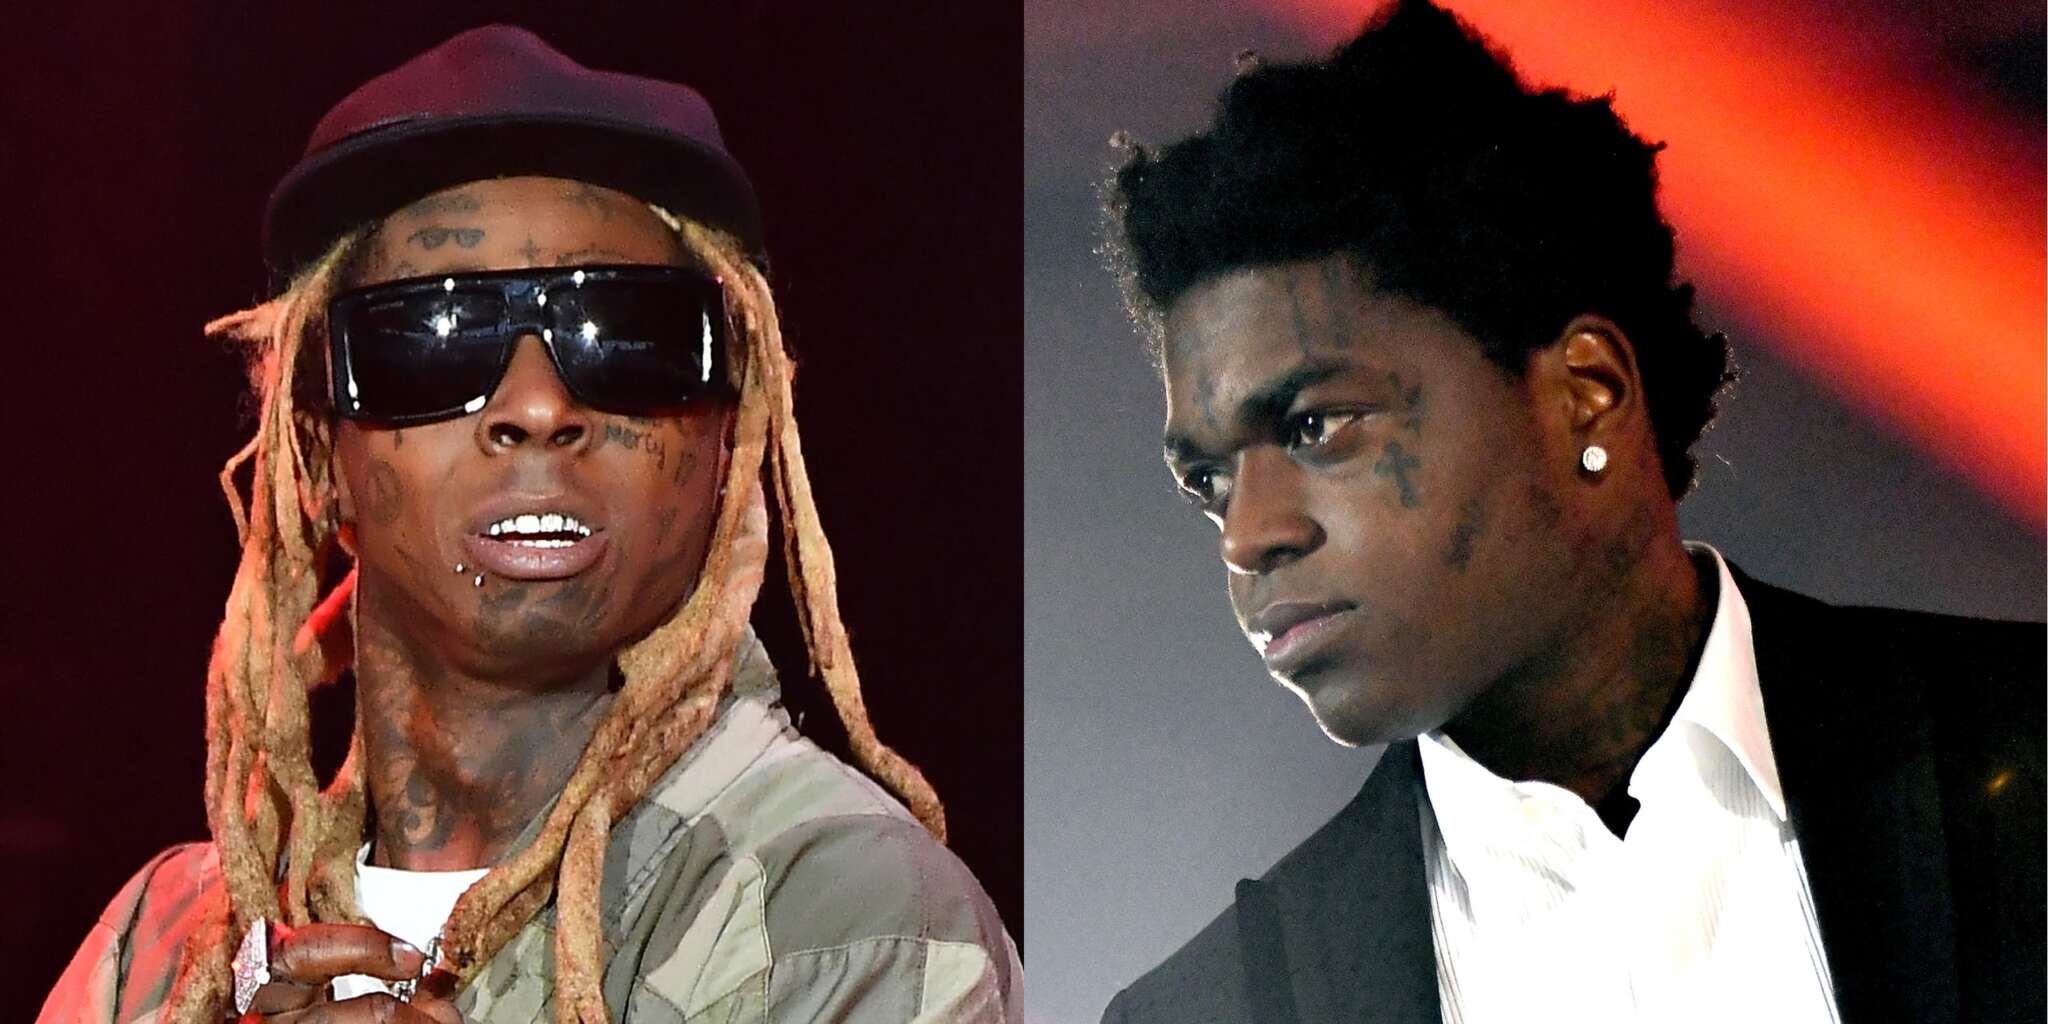 Donald Trump Pardons Lil Wayne And Kodak Black, Reports Say